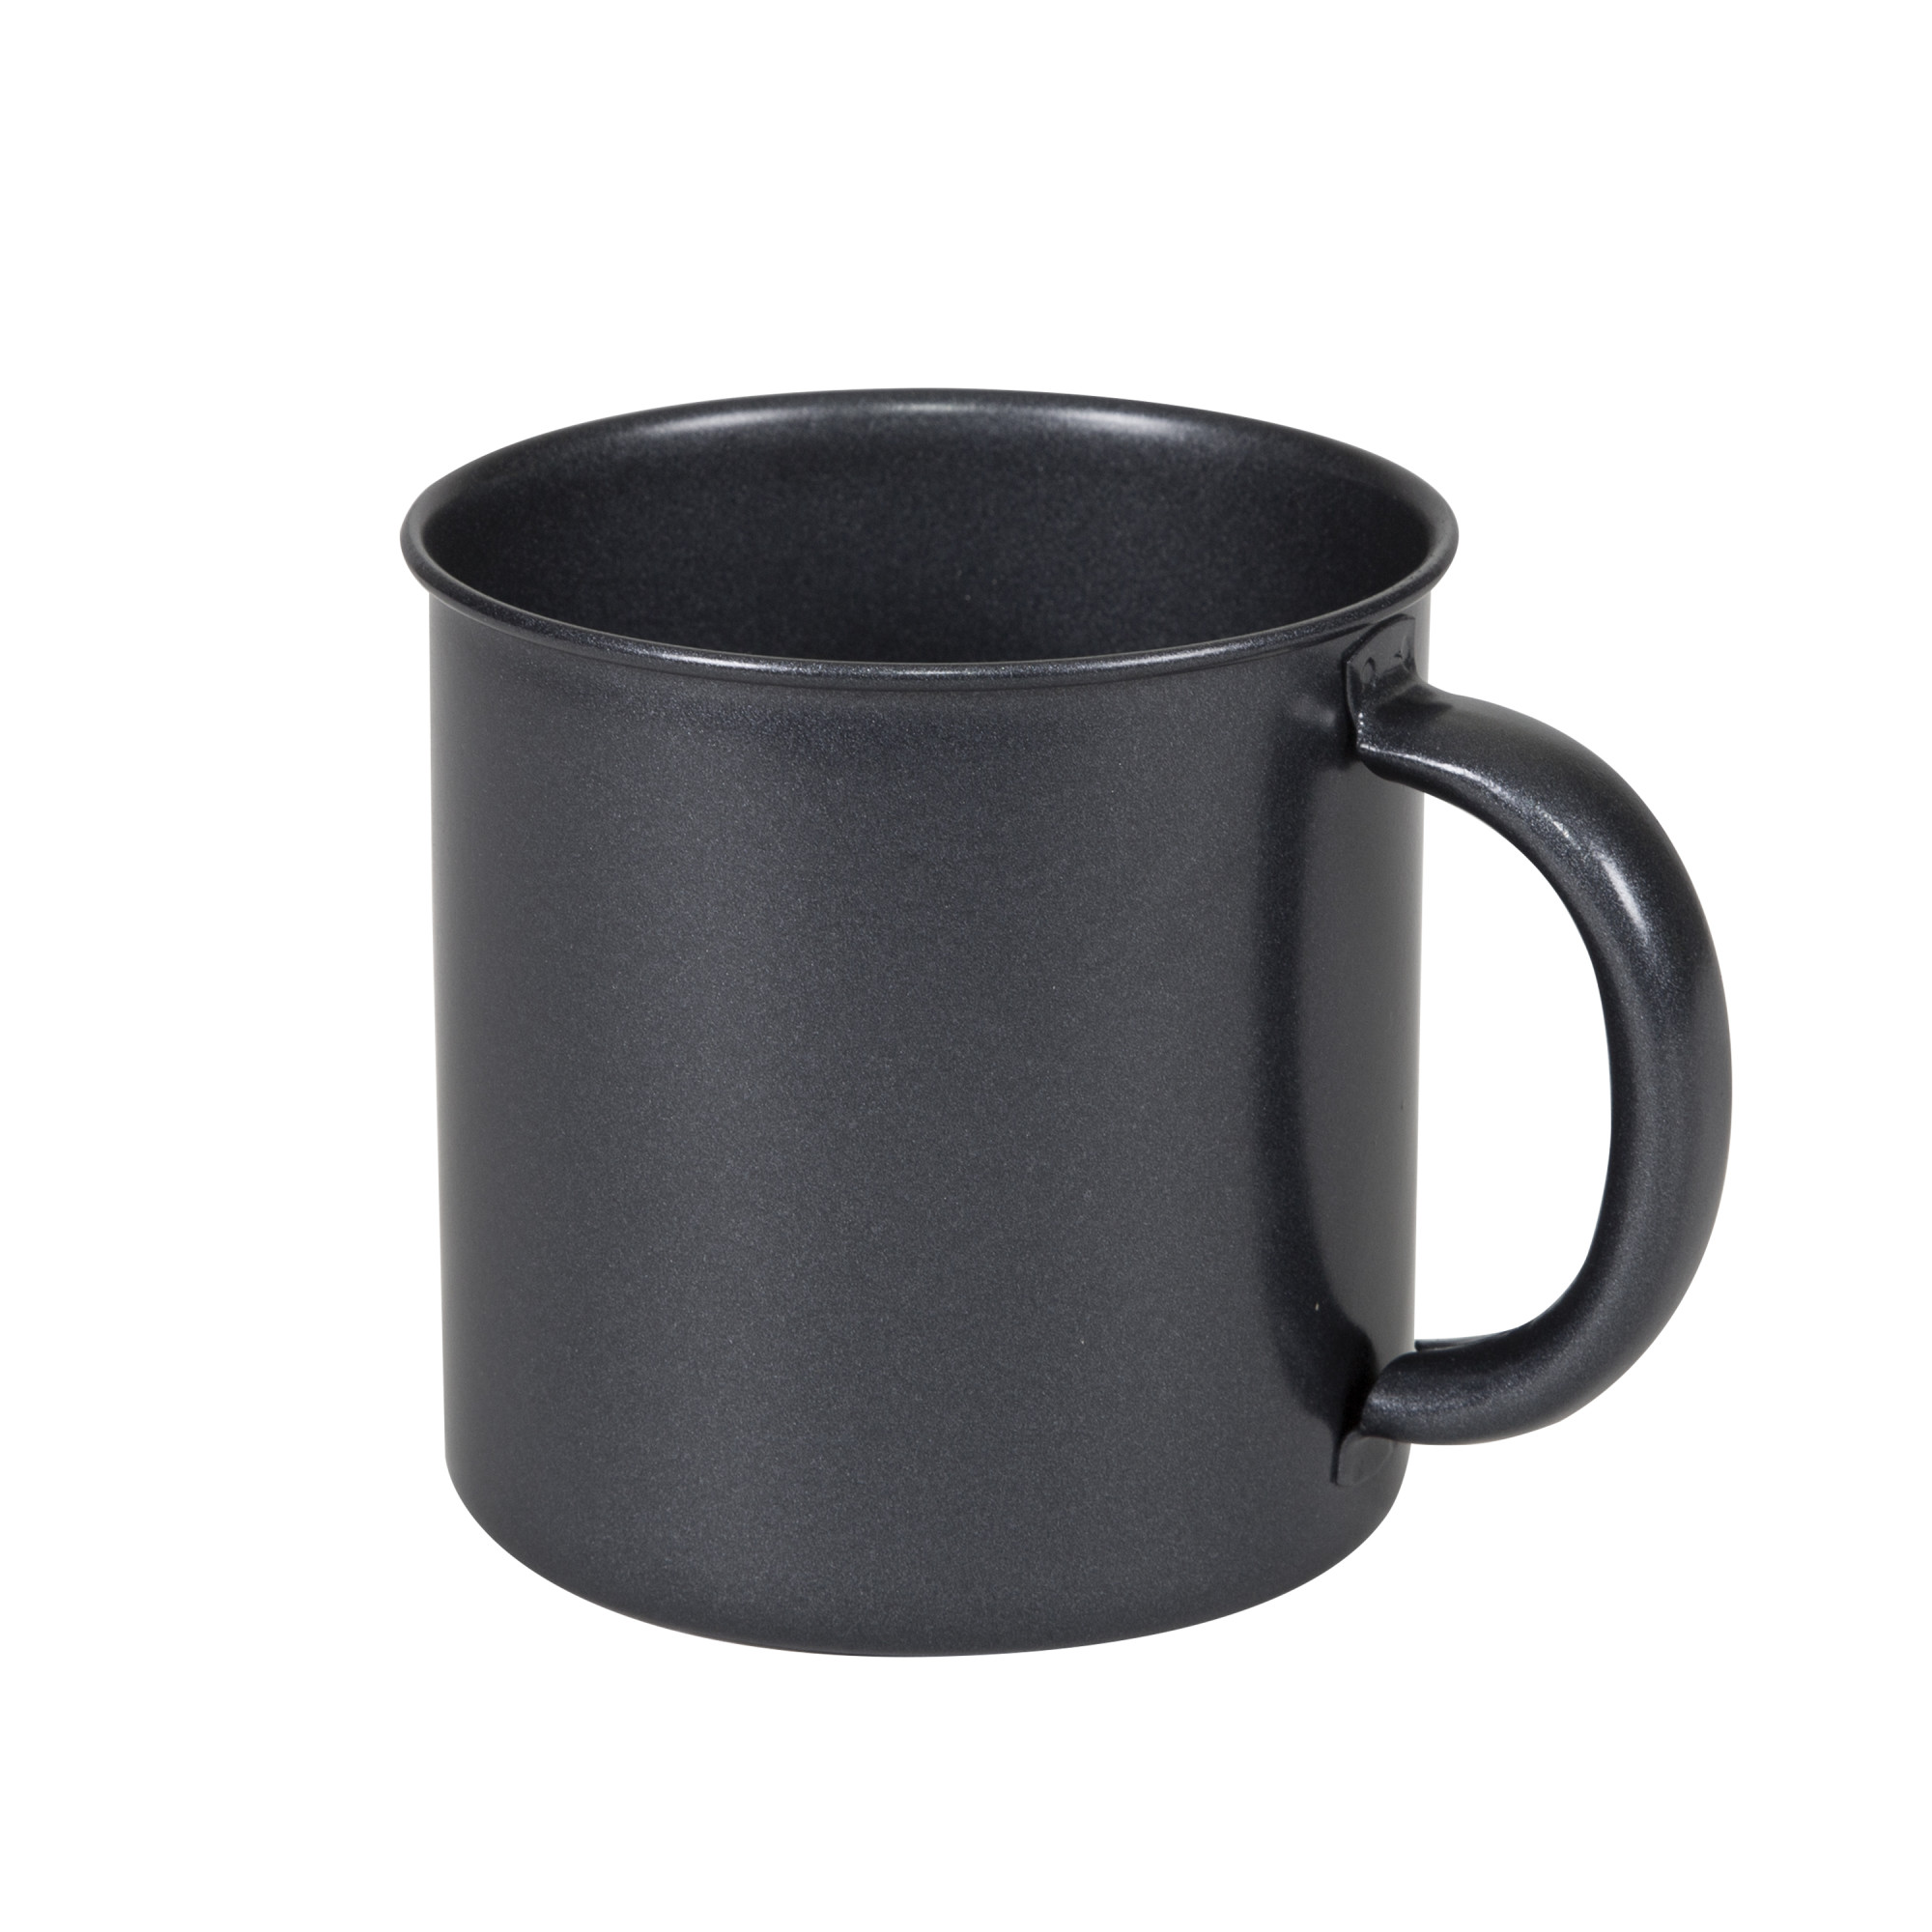 Stansport Black Granite Steel Mug - 14 Oz - image 1 of 8